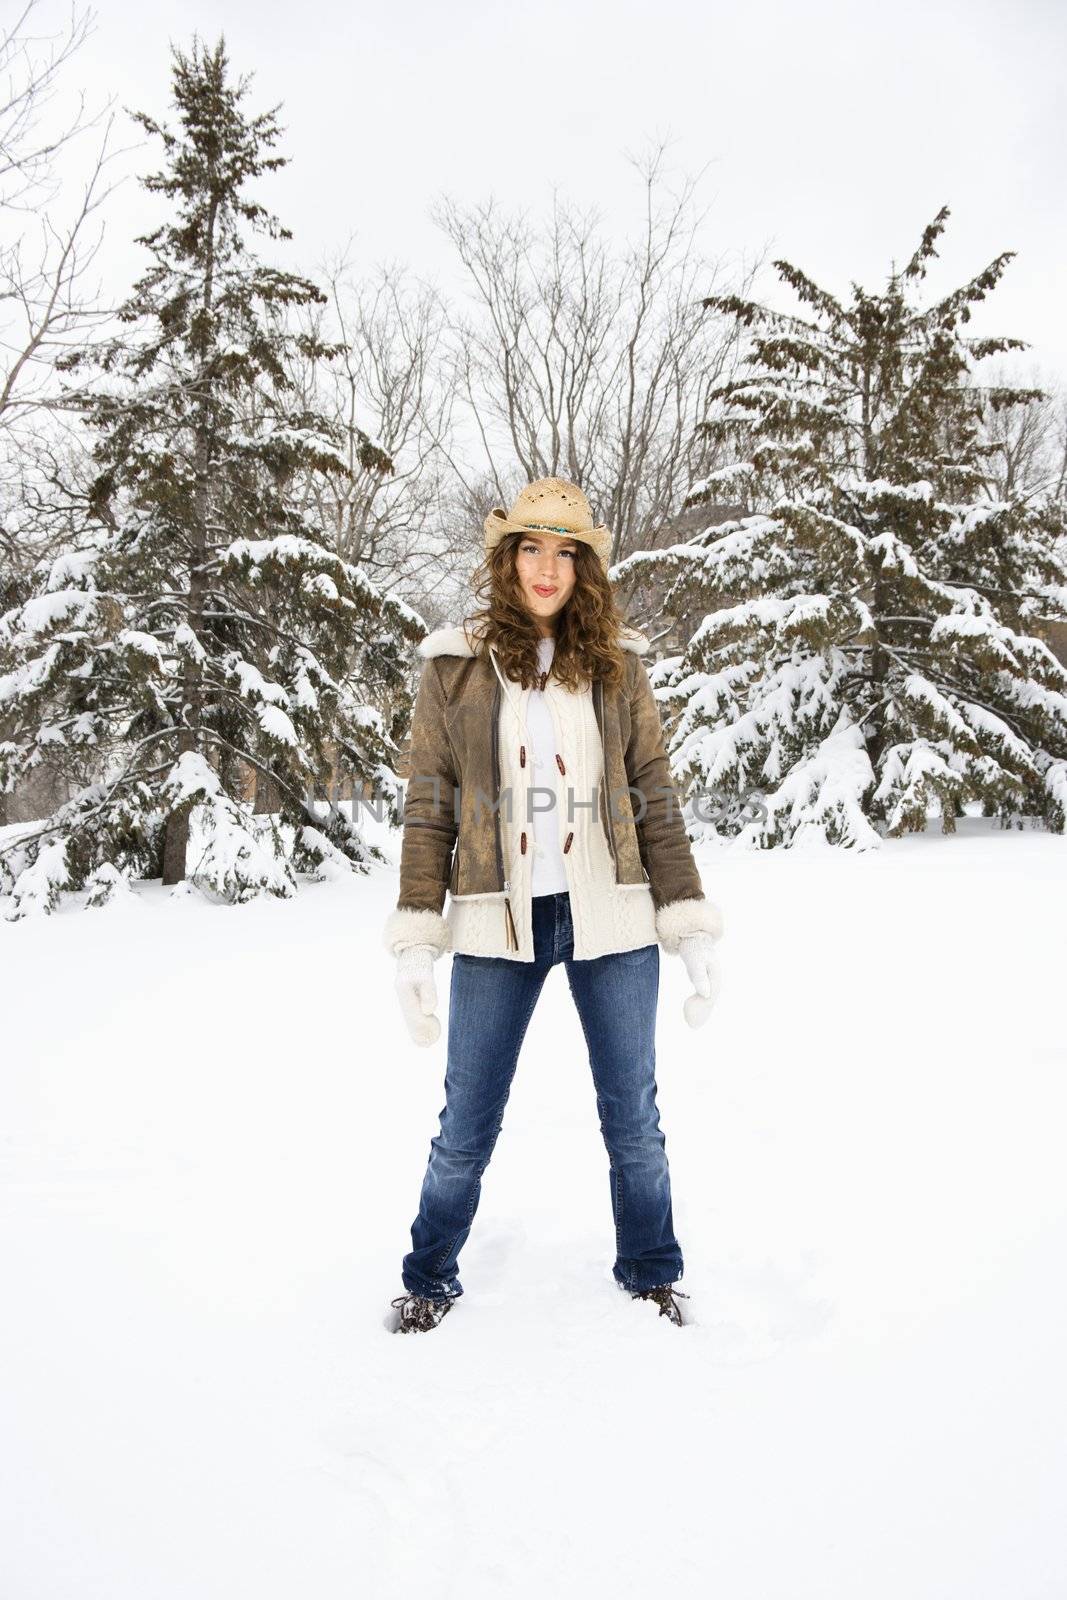 Pretty woman in snow. by iofoto